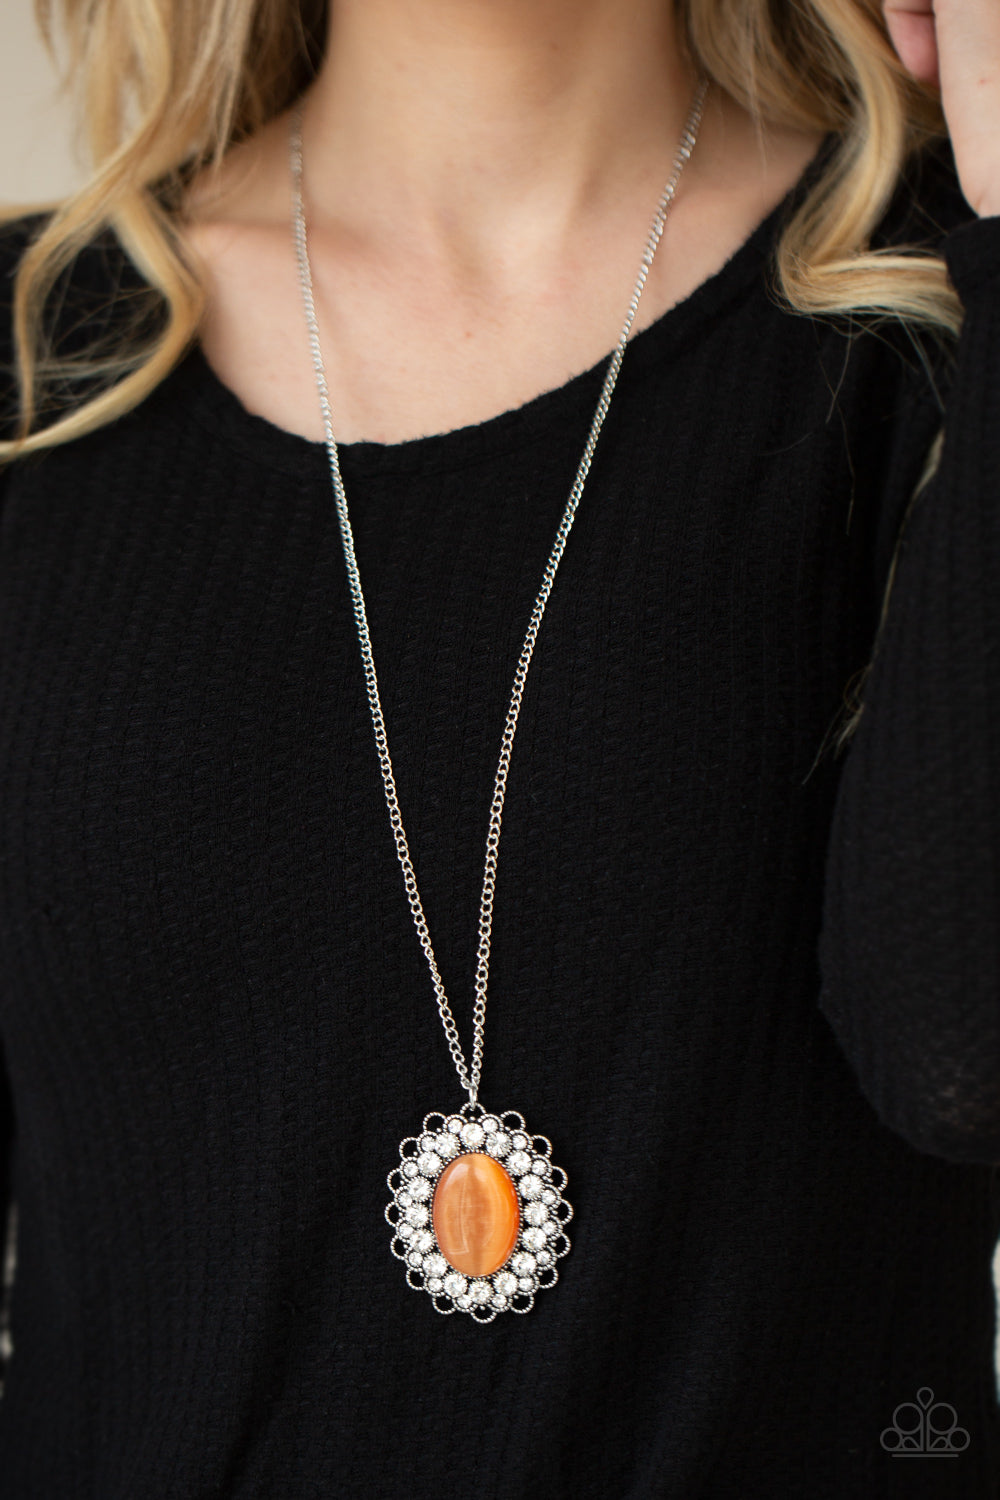 Oh My Medallion - Orange moonstone necklace